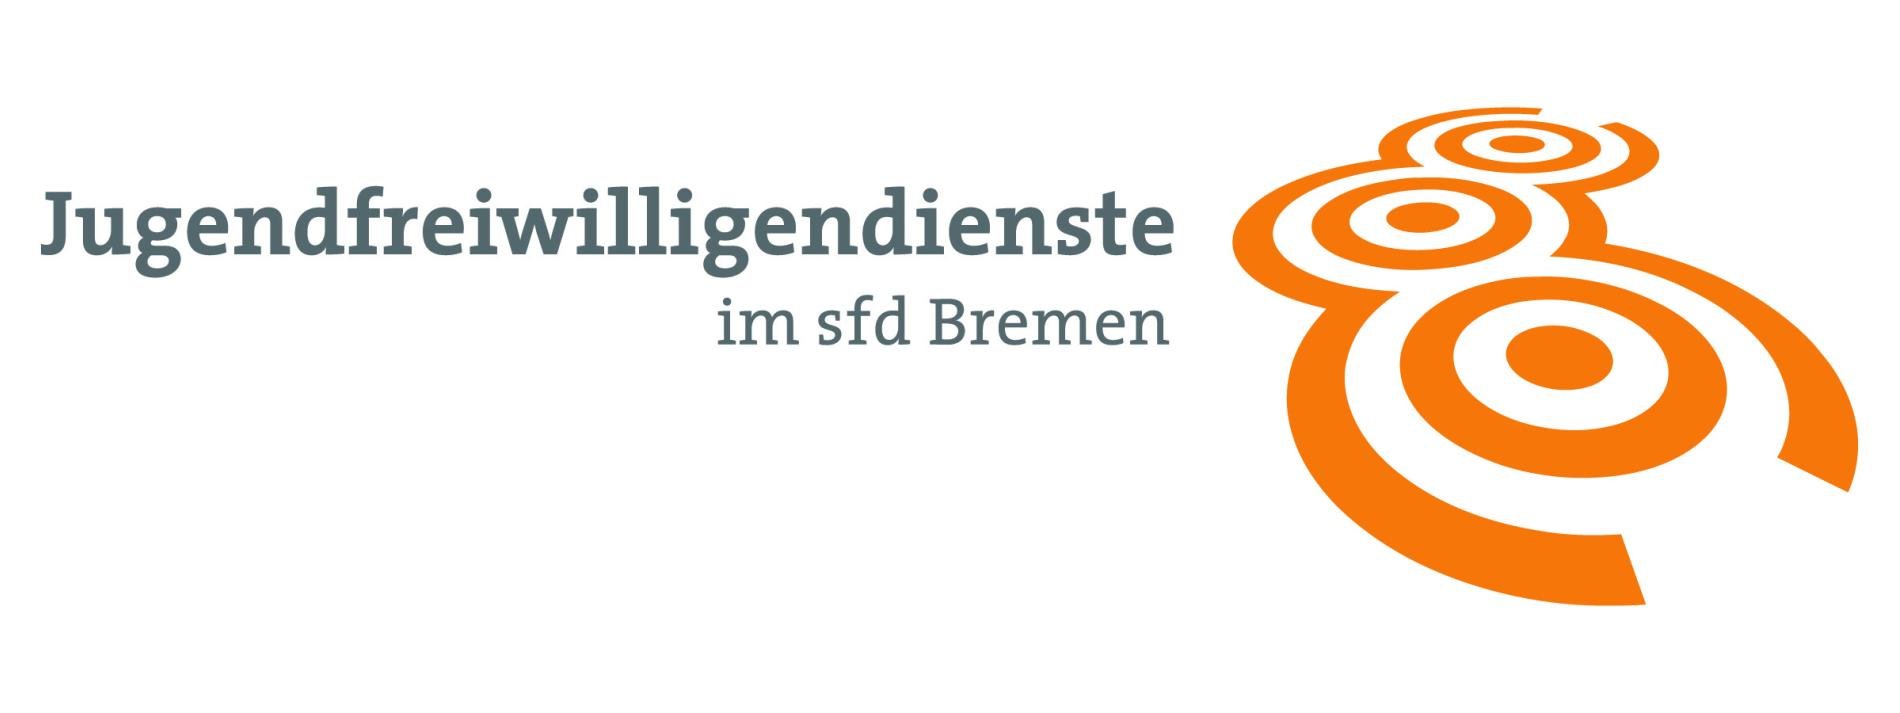 JugendfrwDienst+logo_Hubertus_KOch